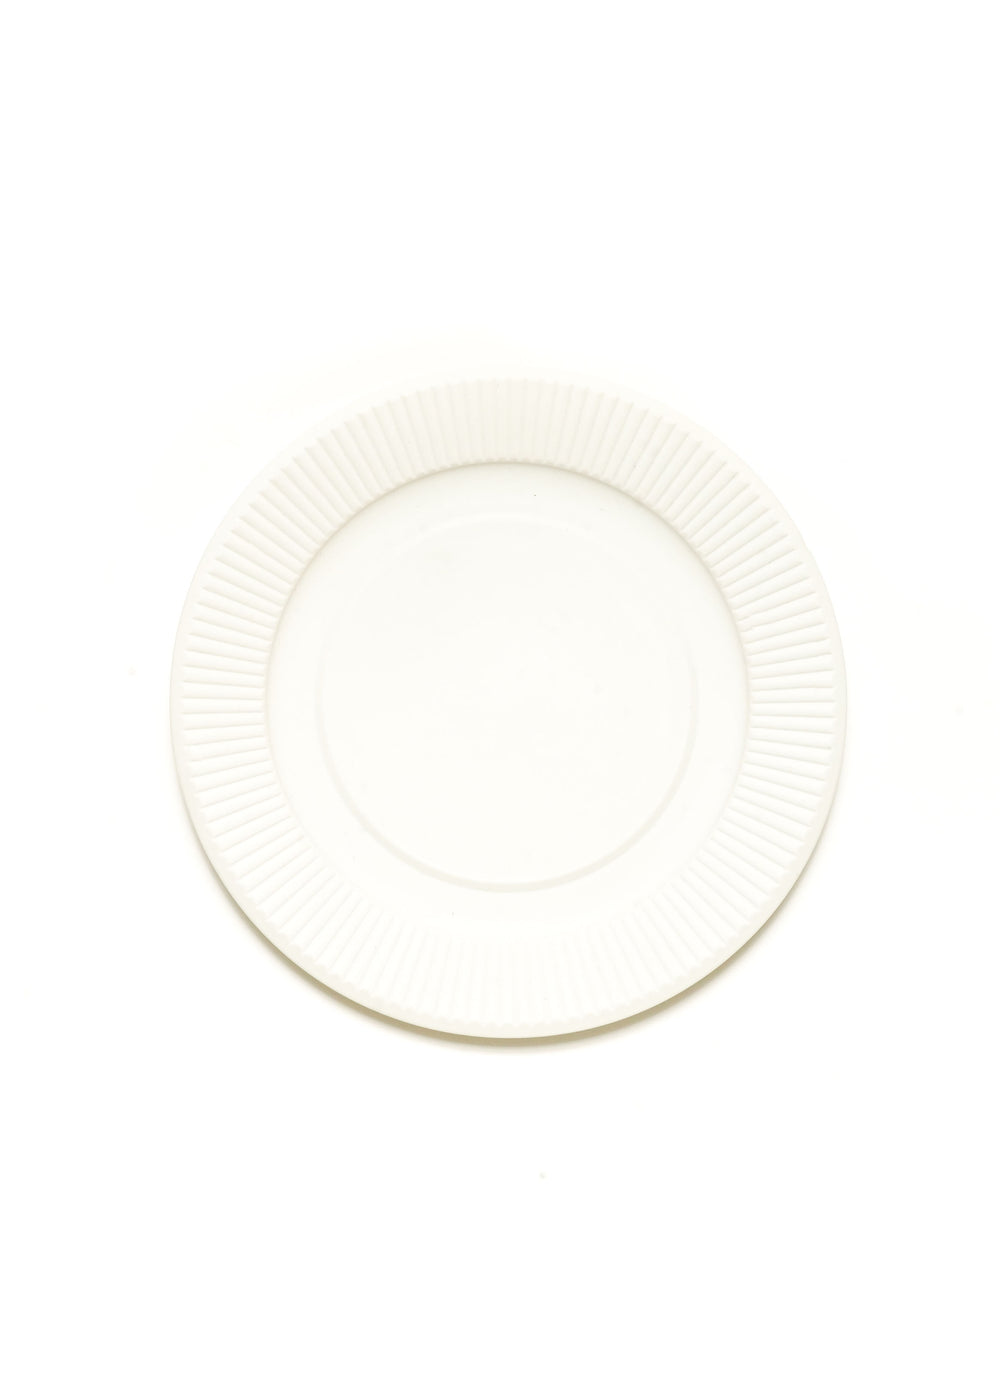 KAMIZARA ( Arita-yaki / Paper Plate / Porcelain)